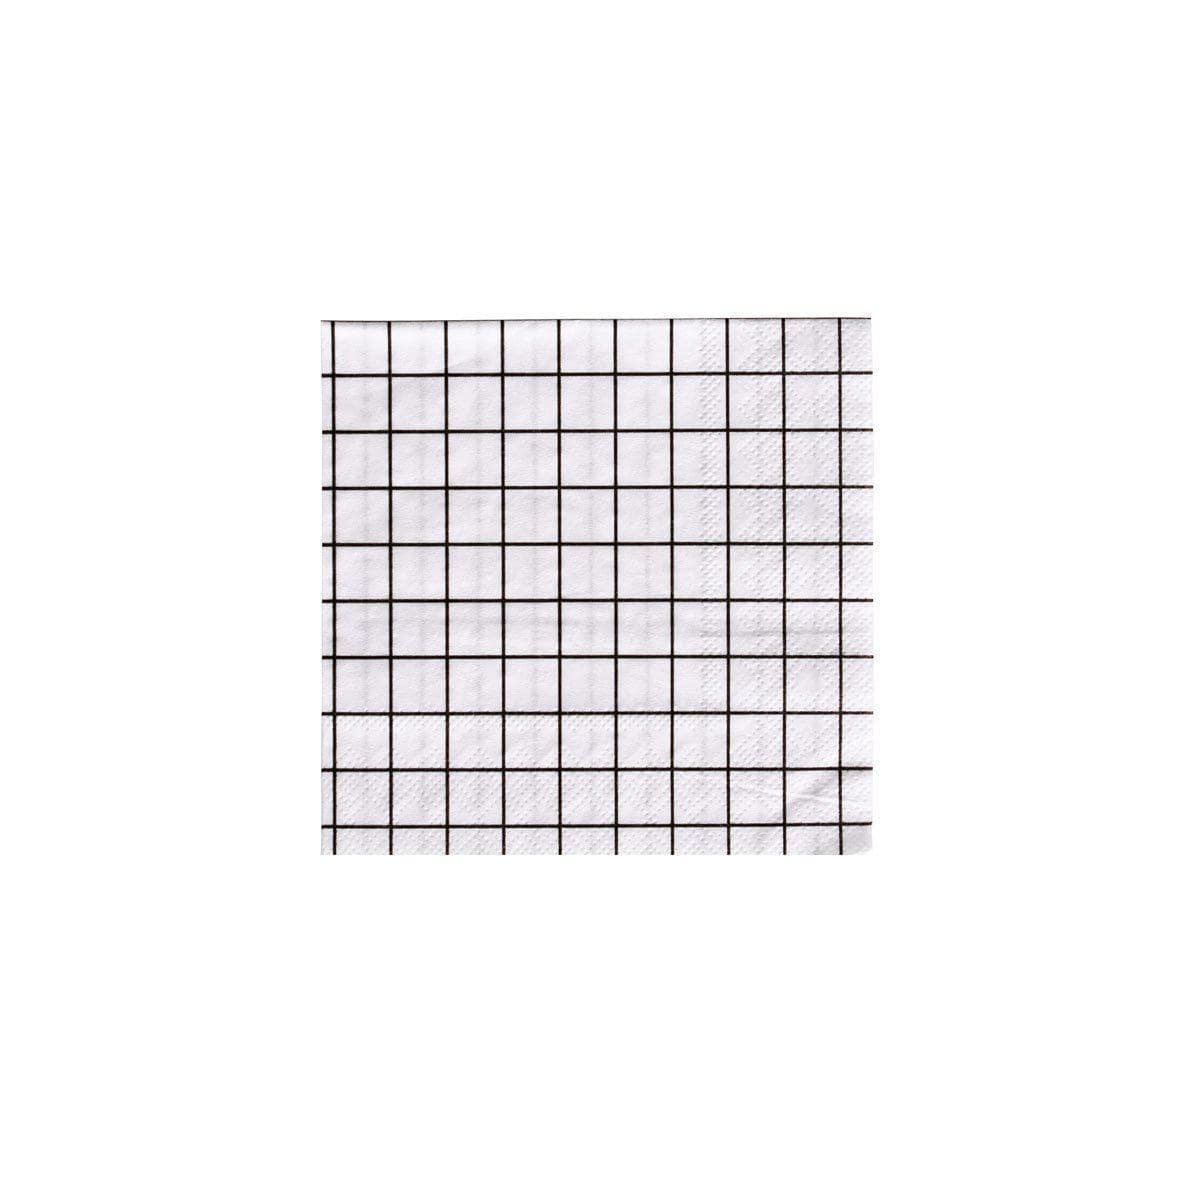 Black and White Grid Napkins - Small